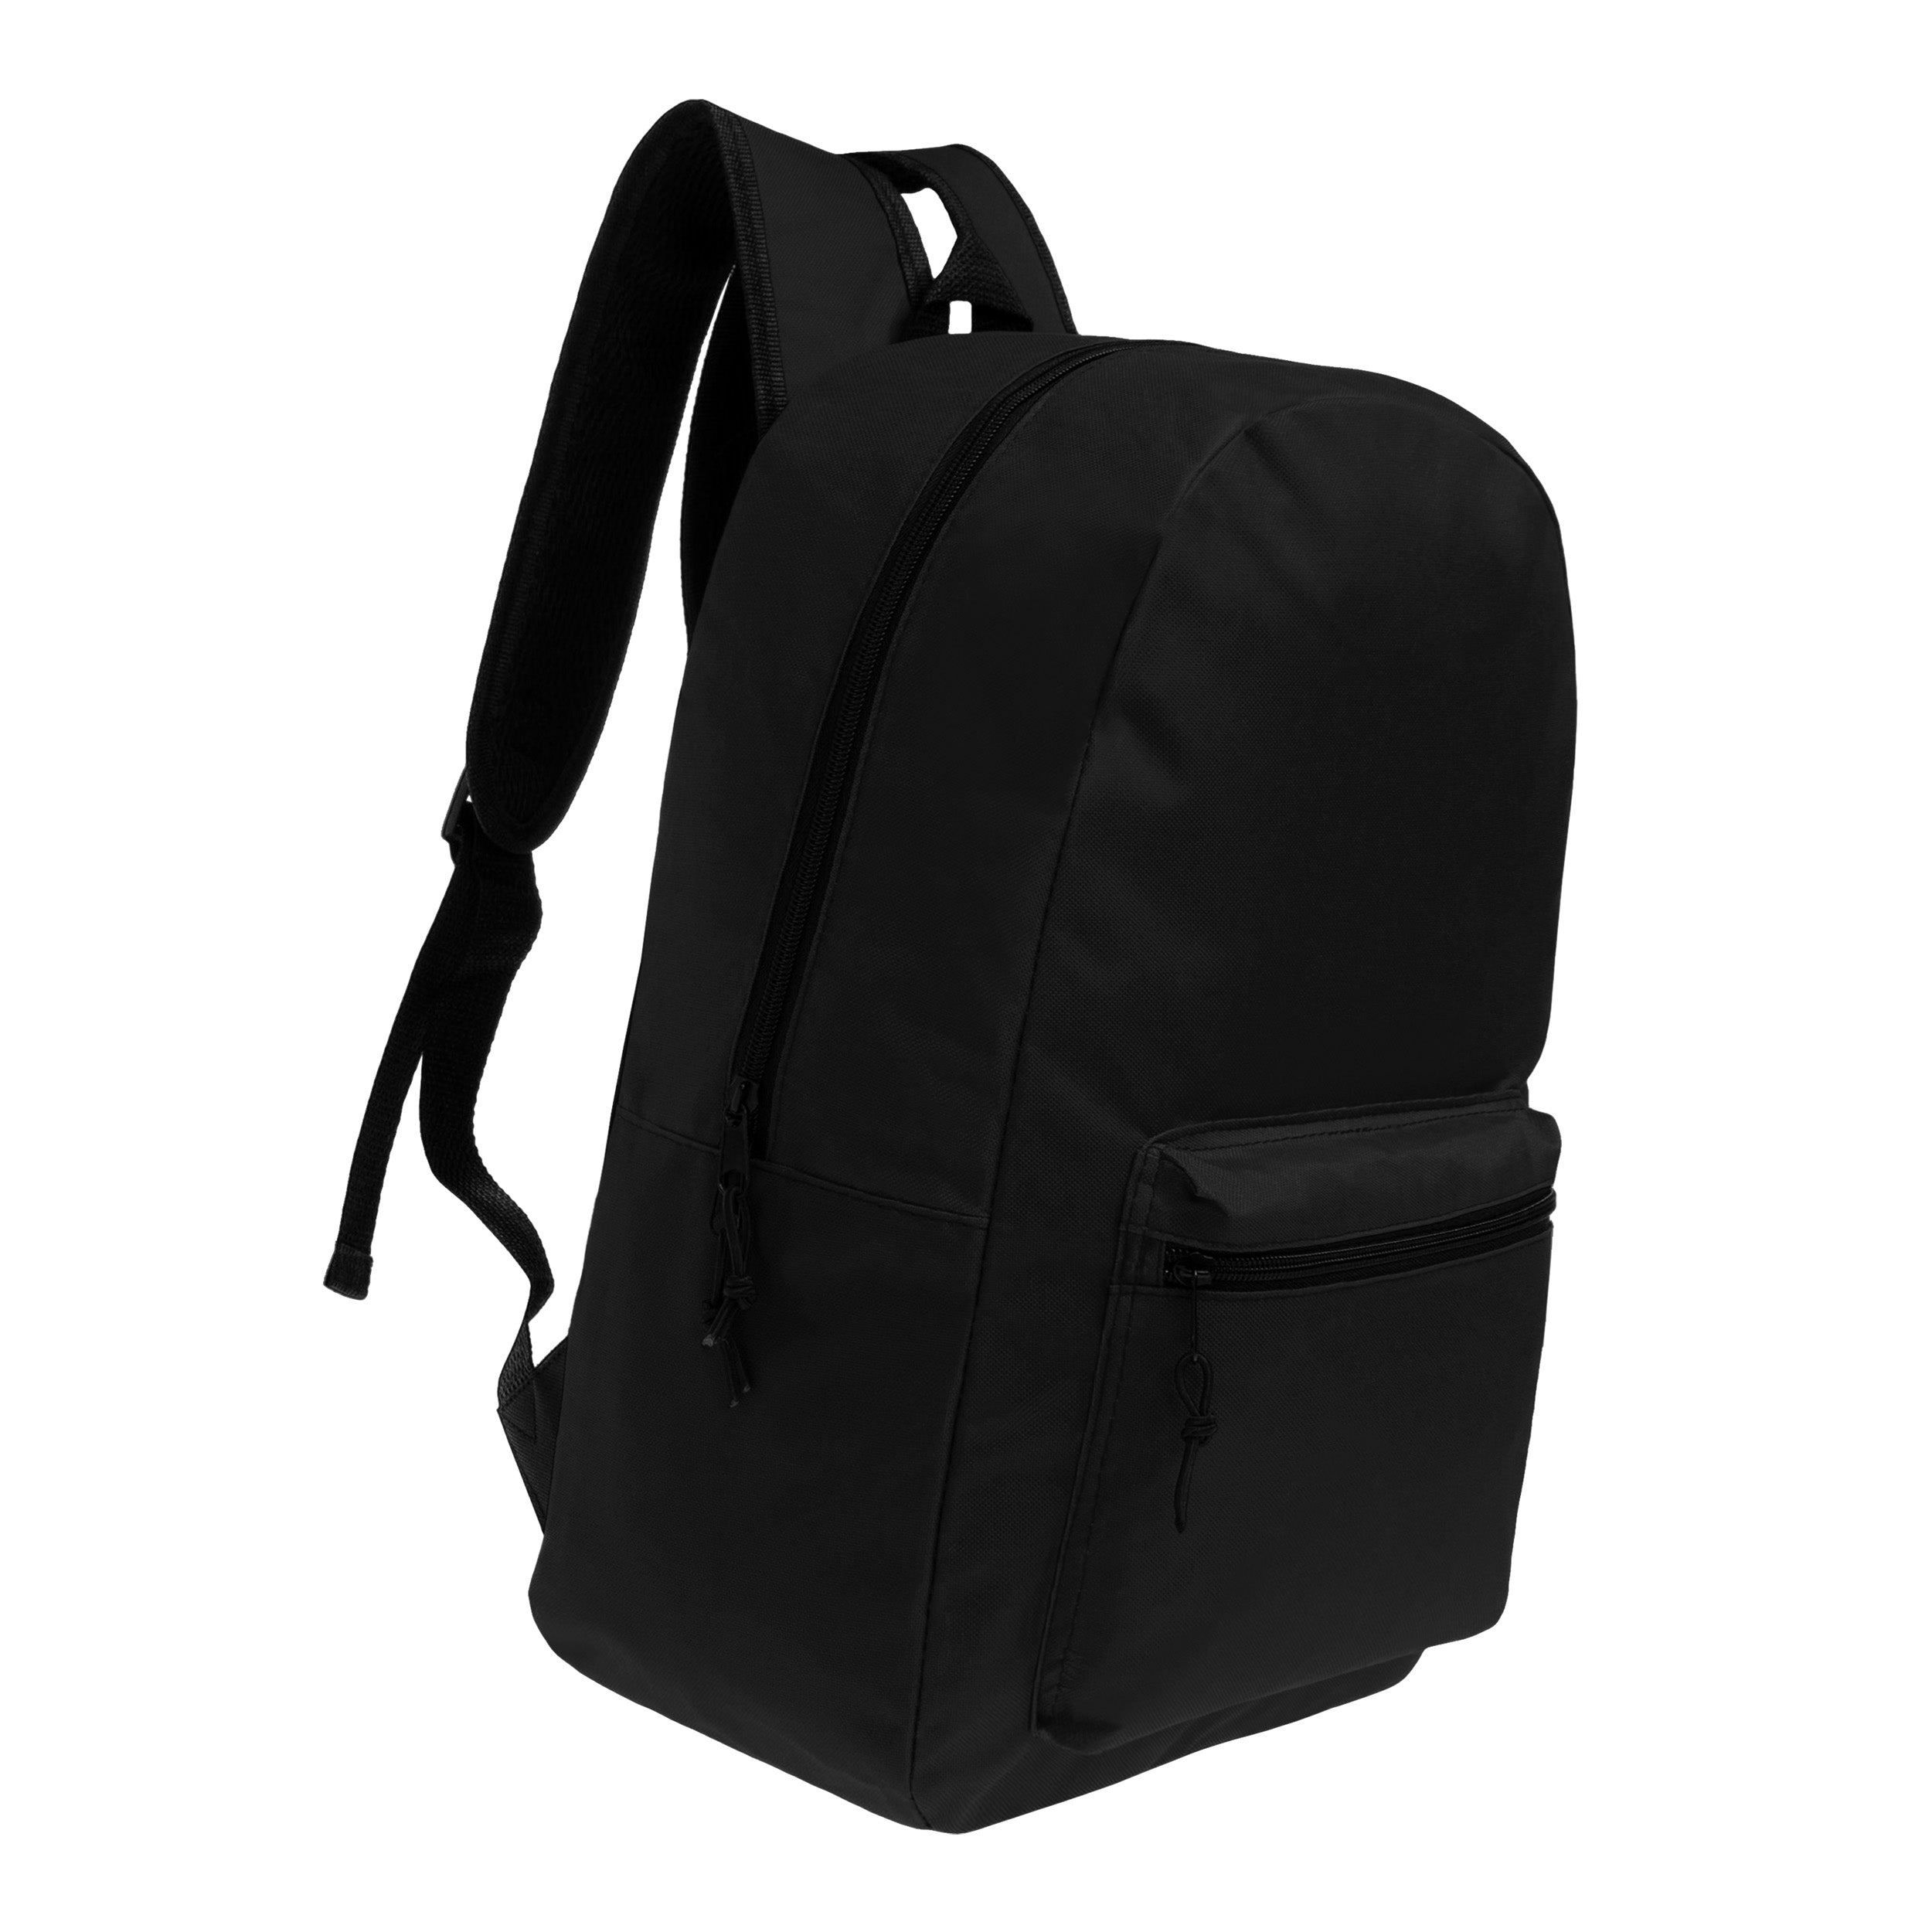 19 inch black wholesale backpack in bulk under $5